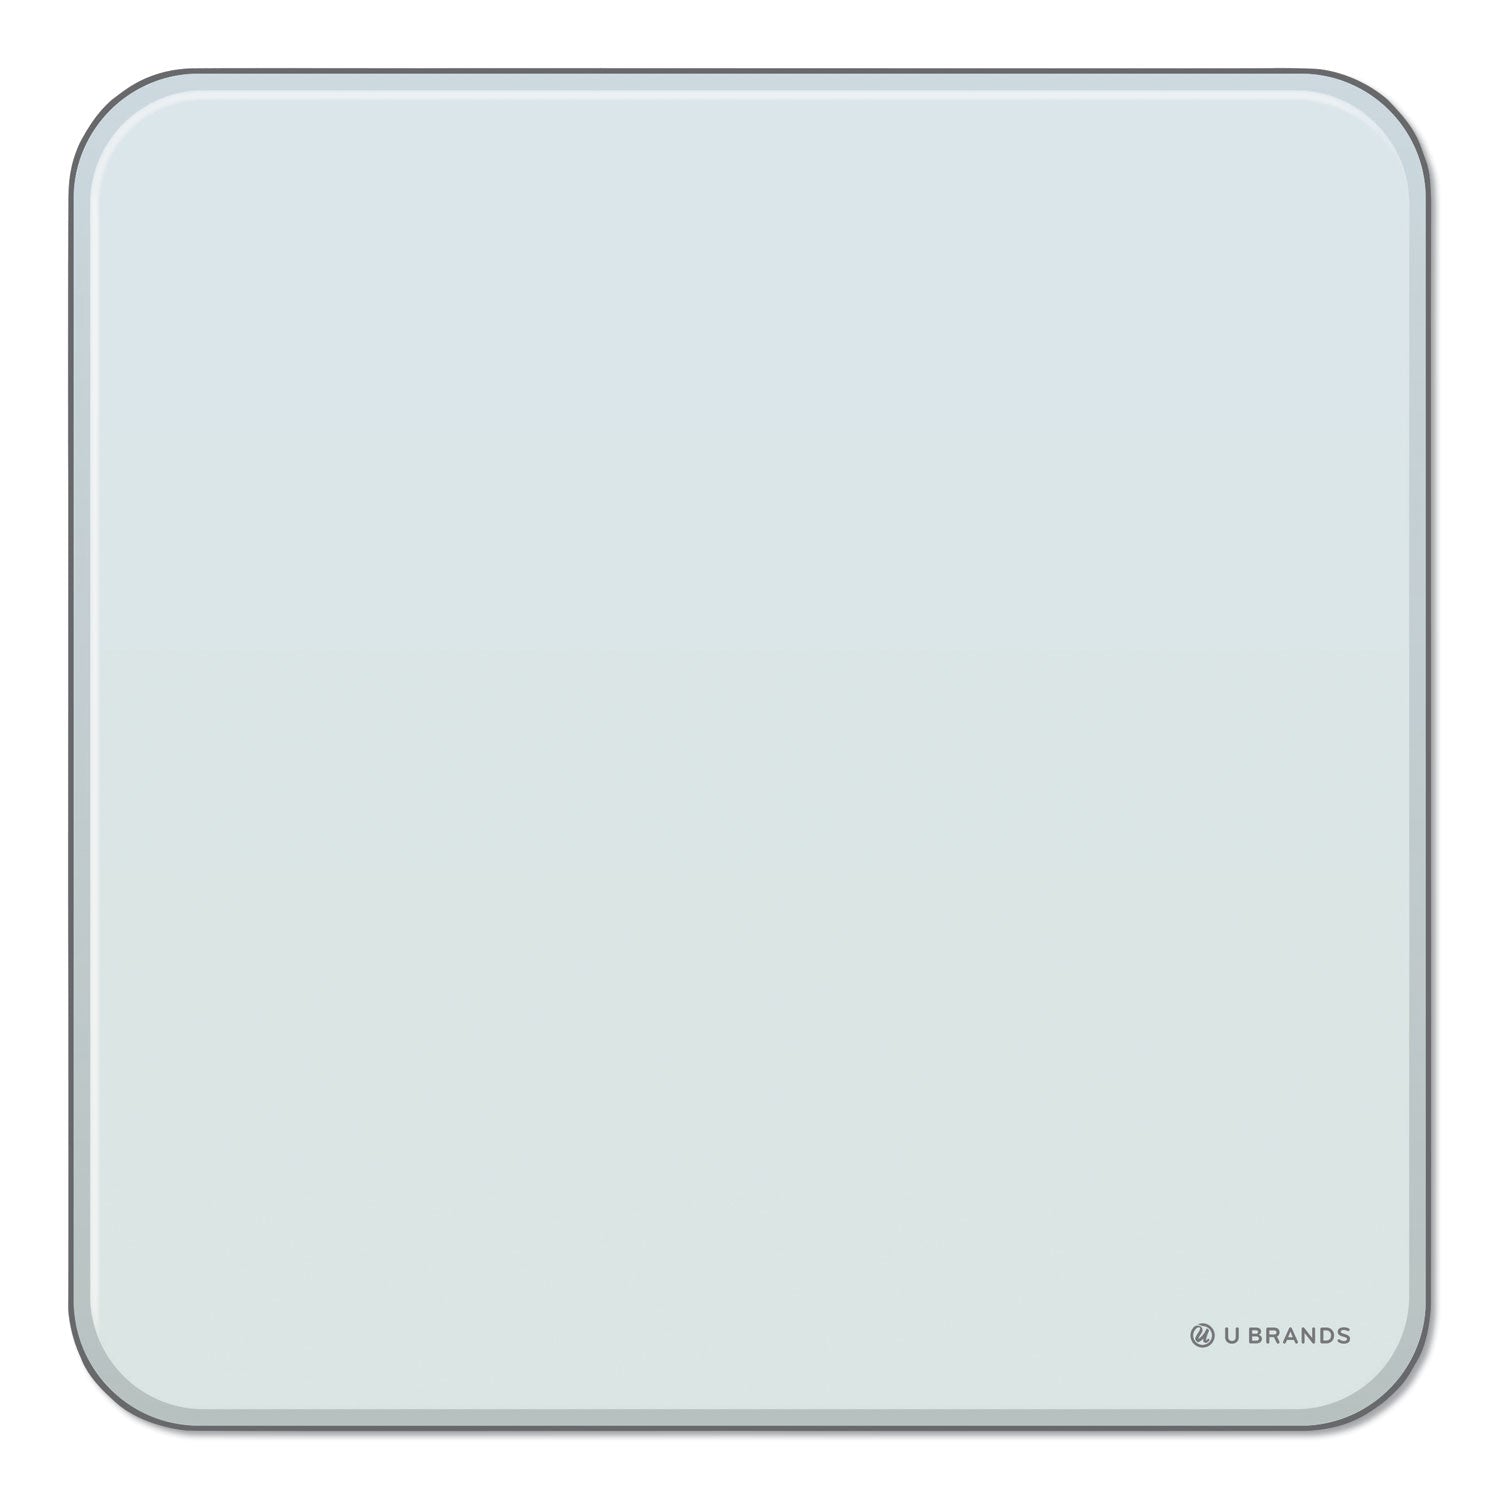 cubicle-glass-dry-erase-board-12-x-12-white-surface_ubr3690u0001 - 1